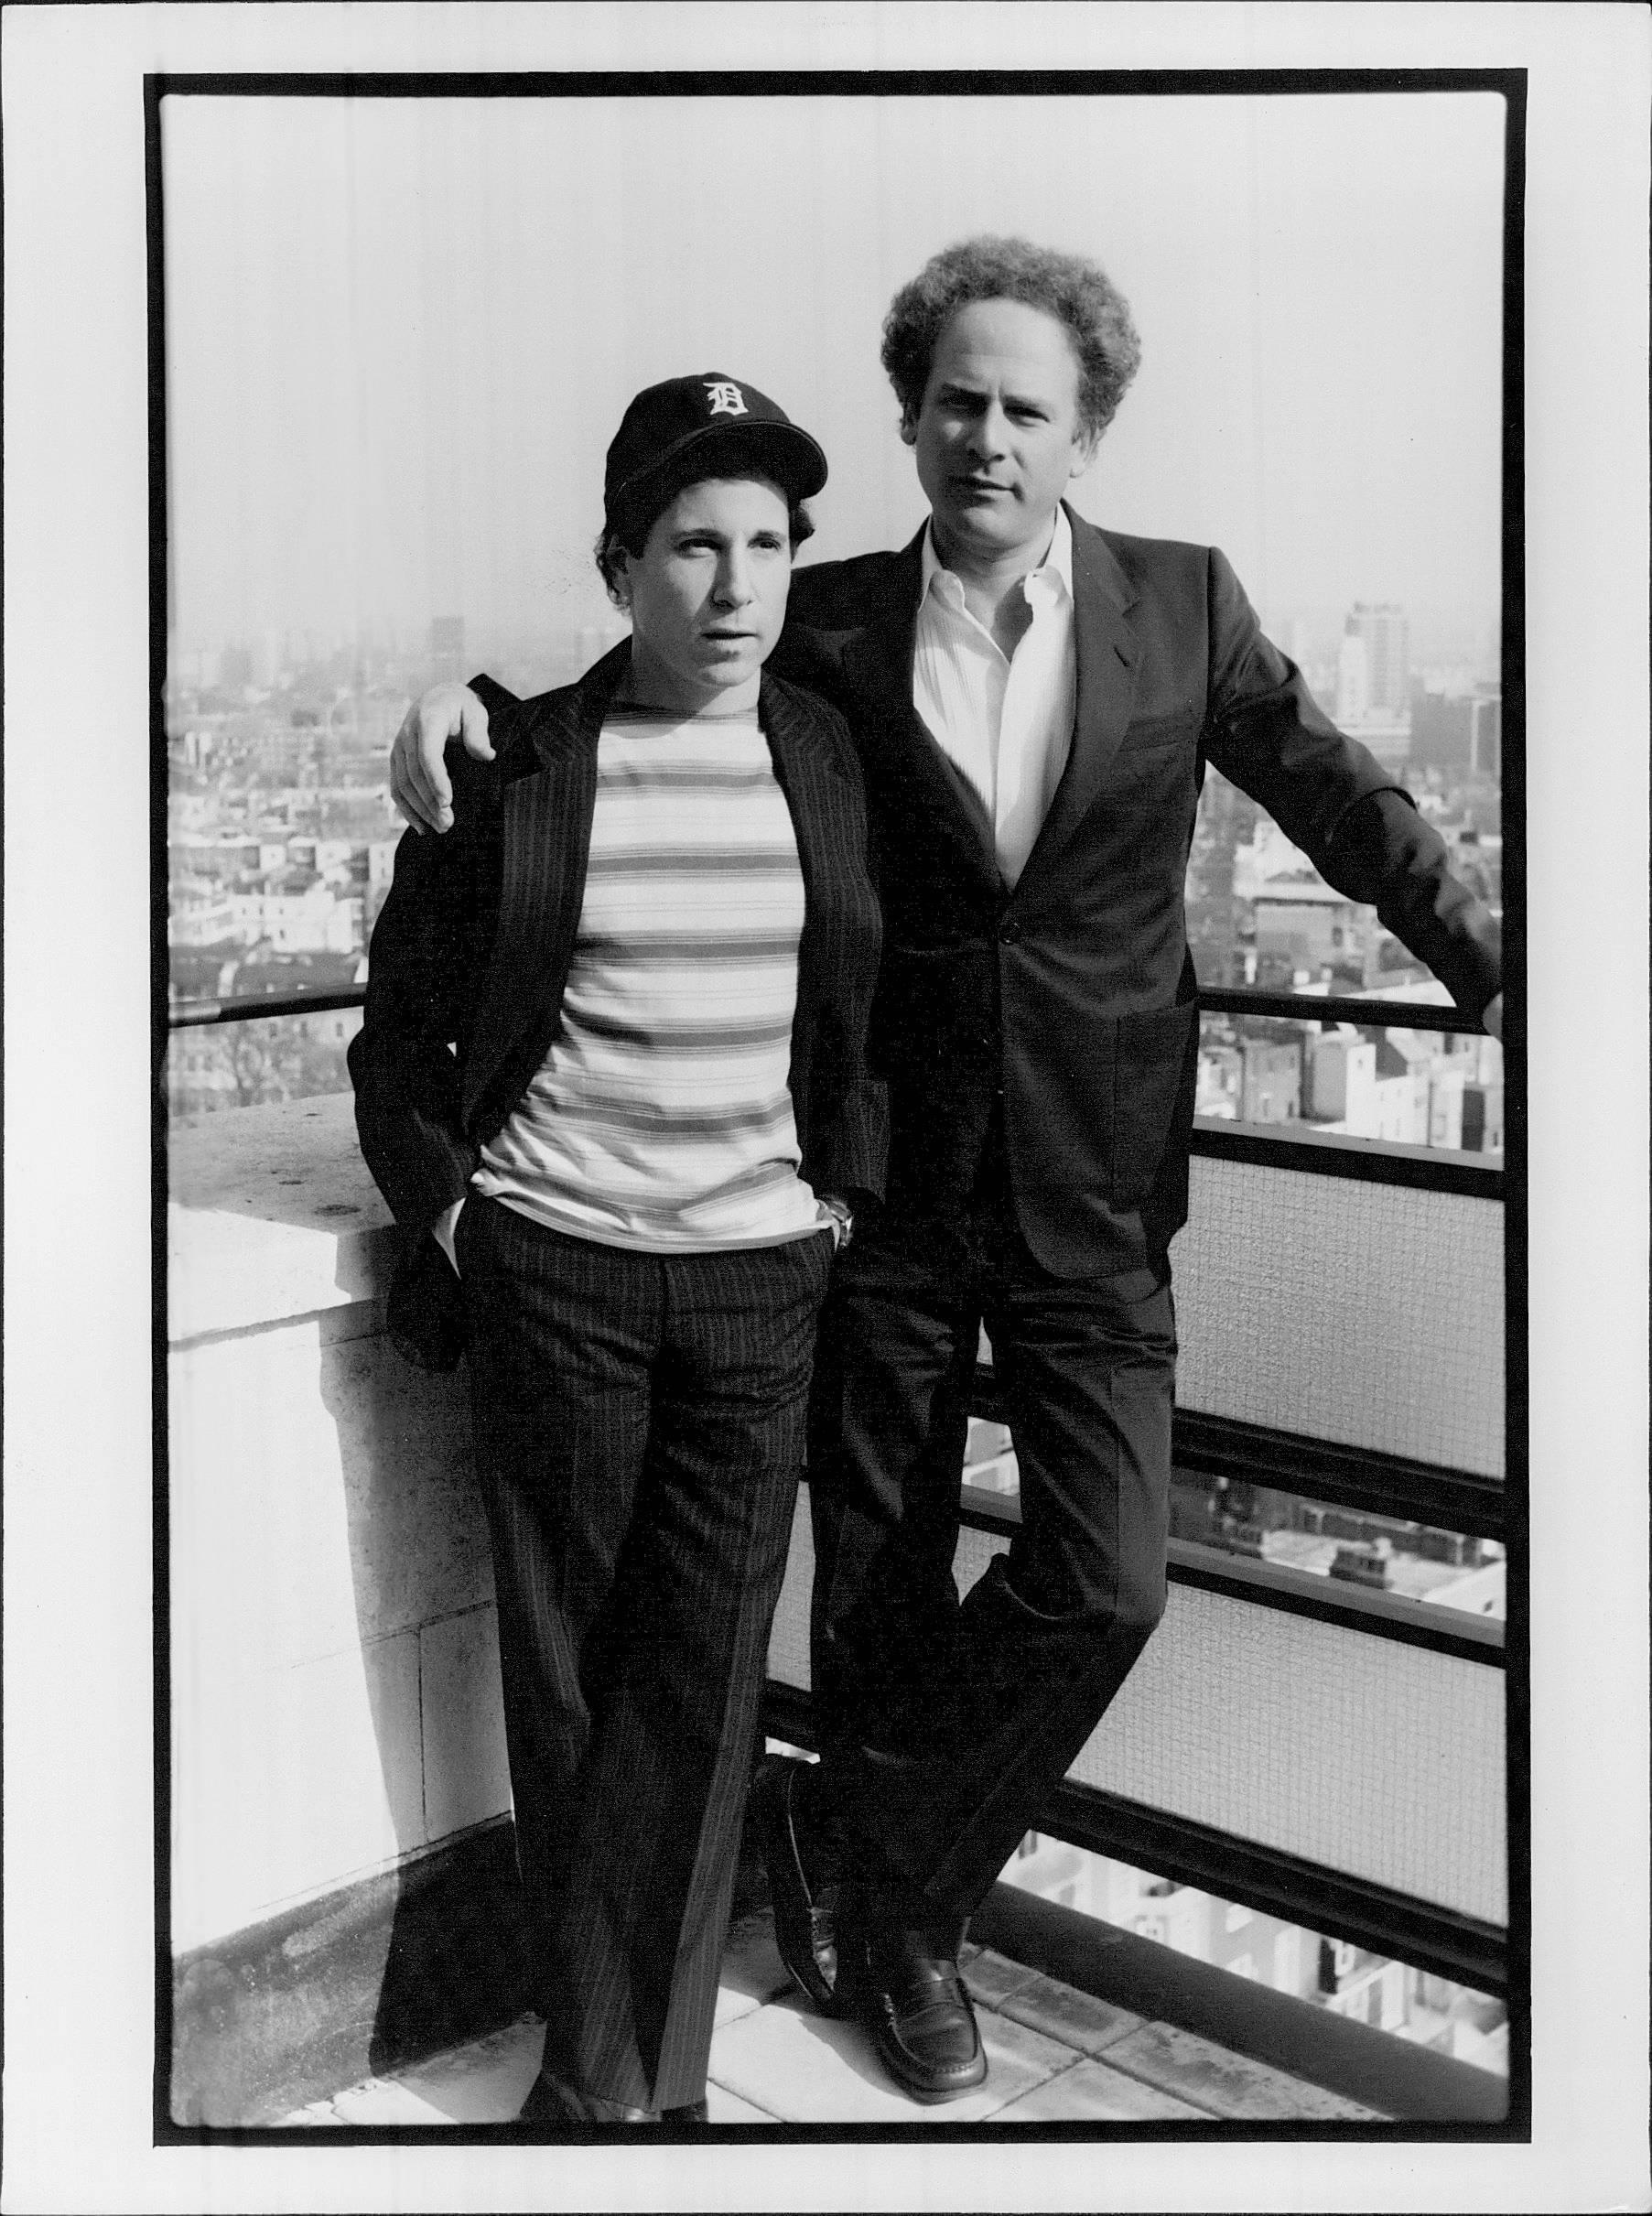 Unknown Portrait Photograph - Simon and Garfunkel Full-Length Vintage Original Photograph